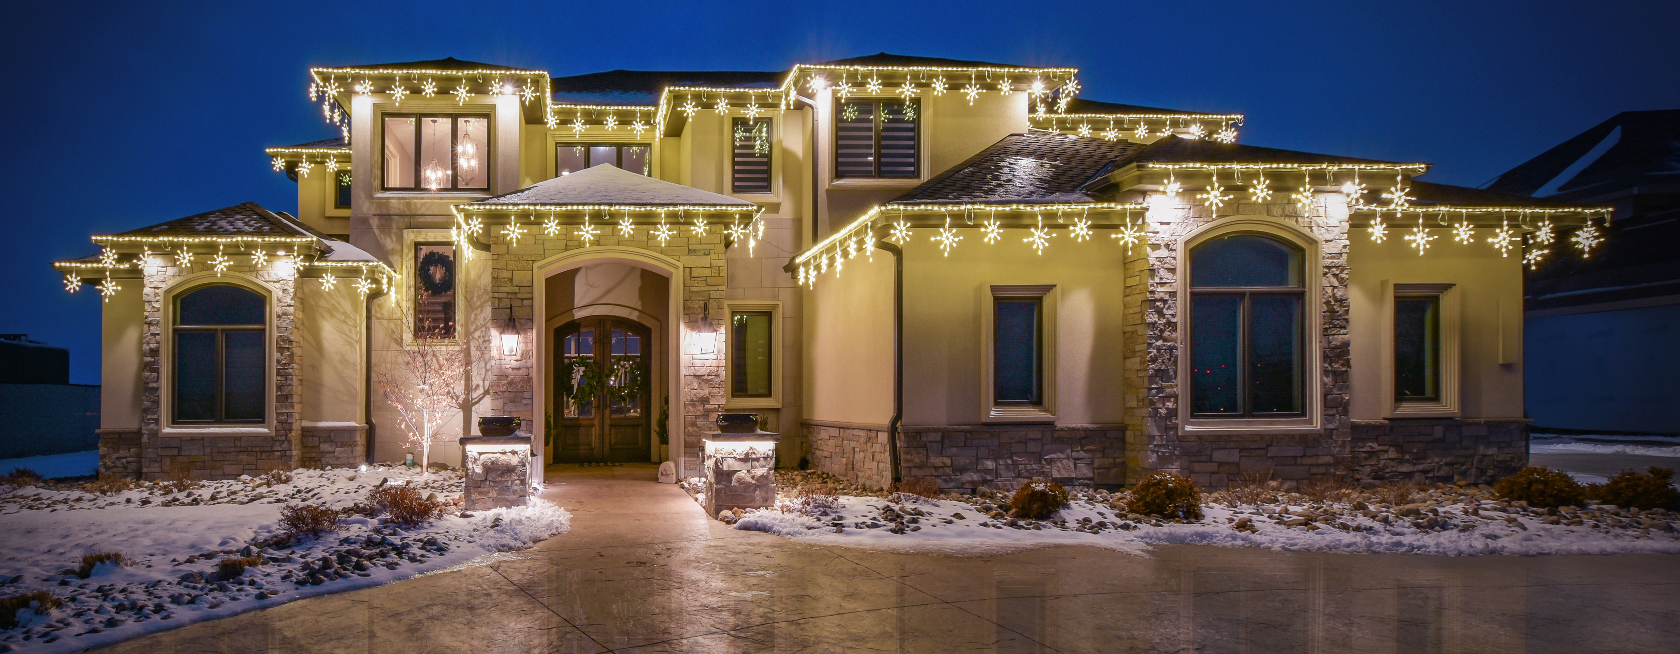 Bulk Christmas Lights, Outdoor Christmas Decorations, Holiday